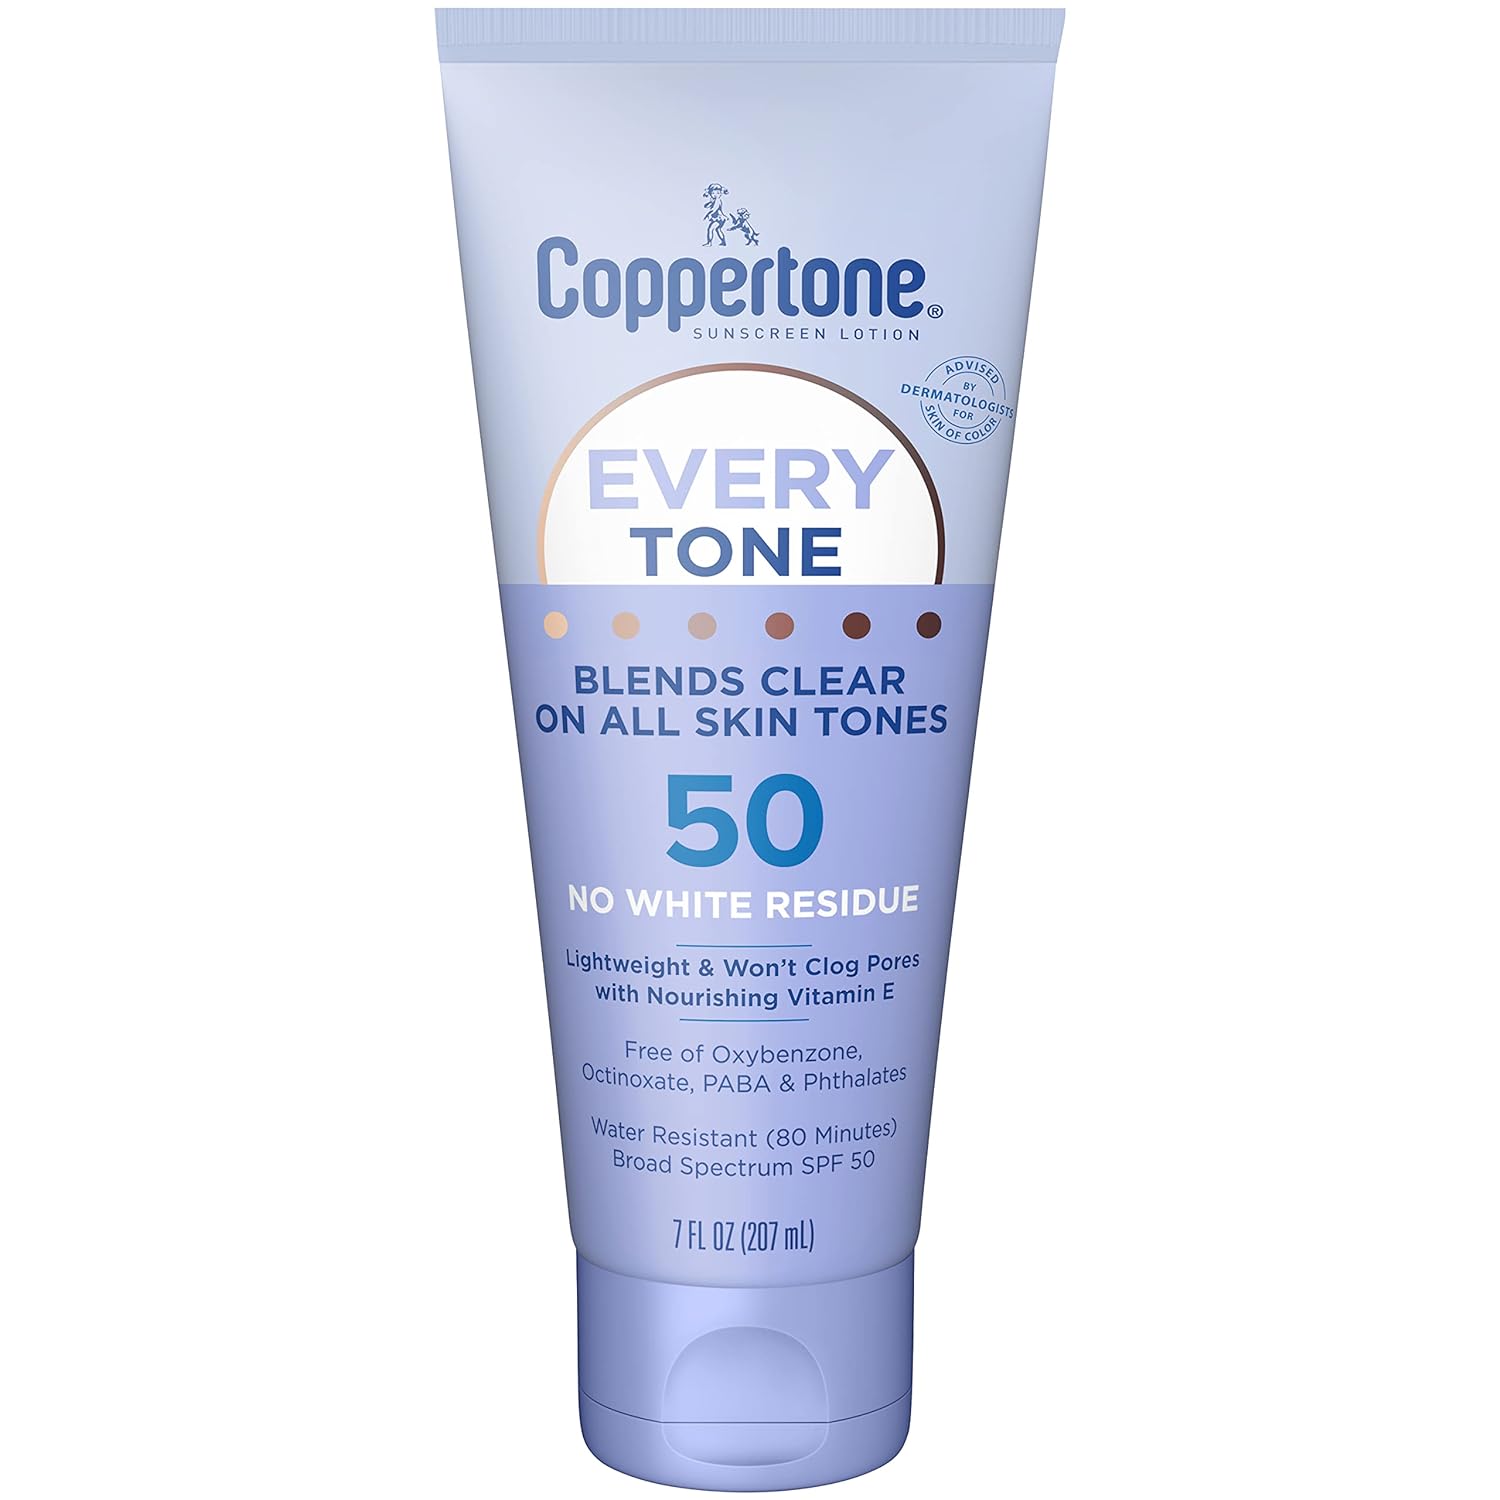 Coppertone Every Tone SPF 50 Sunscreen Lotion, Body & Face Sunscreen Lotion, 7 fl oz